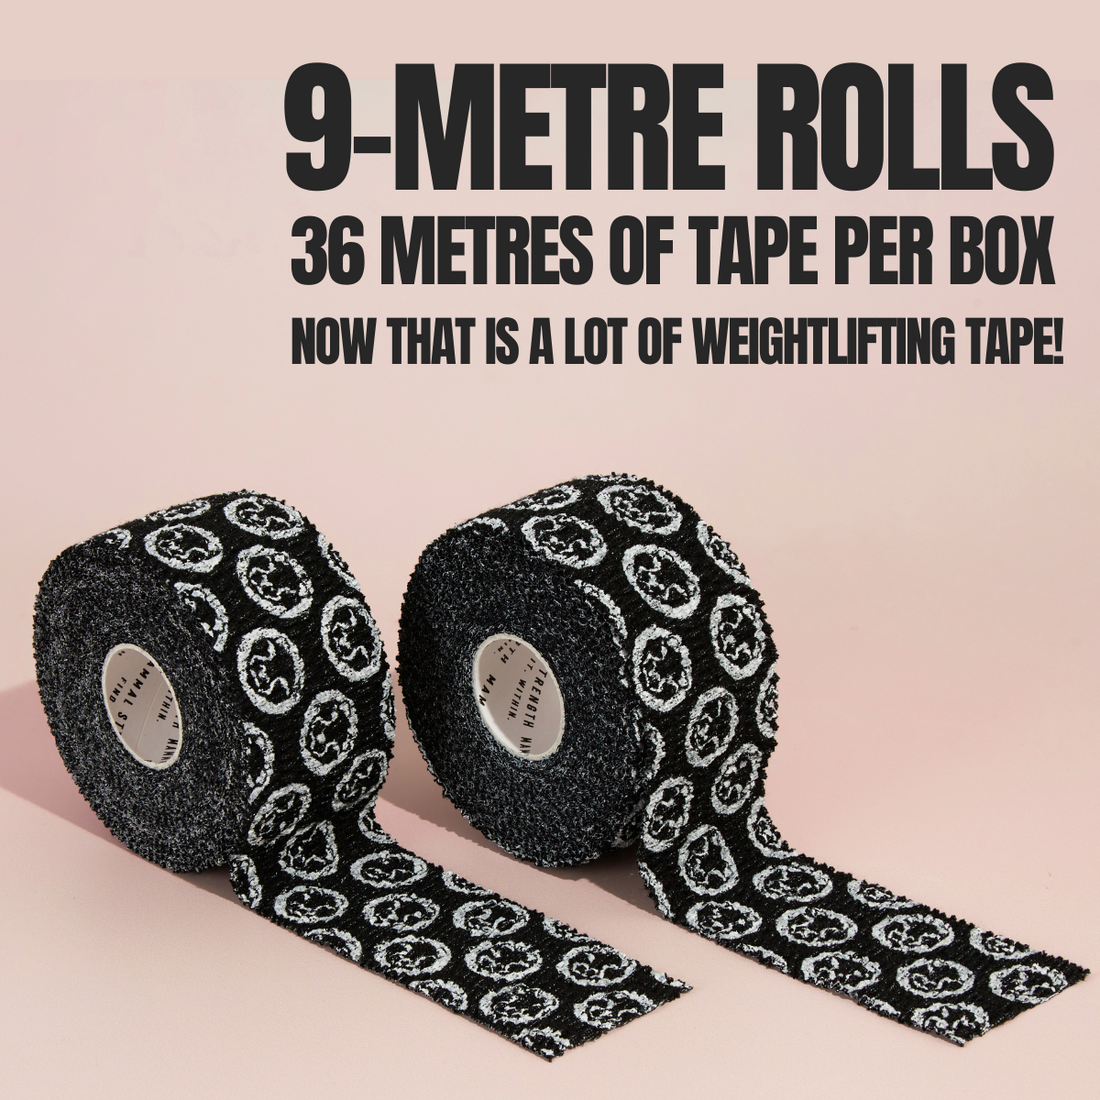 Black Thumb &amp; Weightlifting Tape - Mammal Tape 30ft / 9-Metre Rolls (4-Pack)